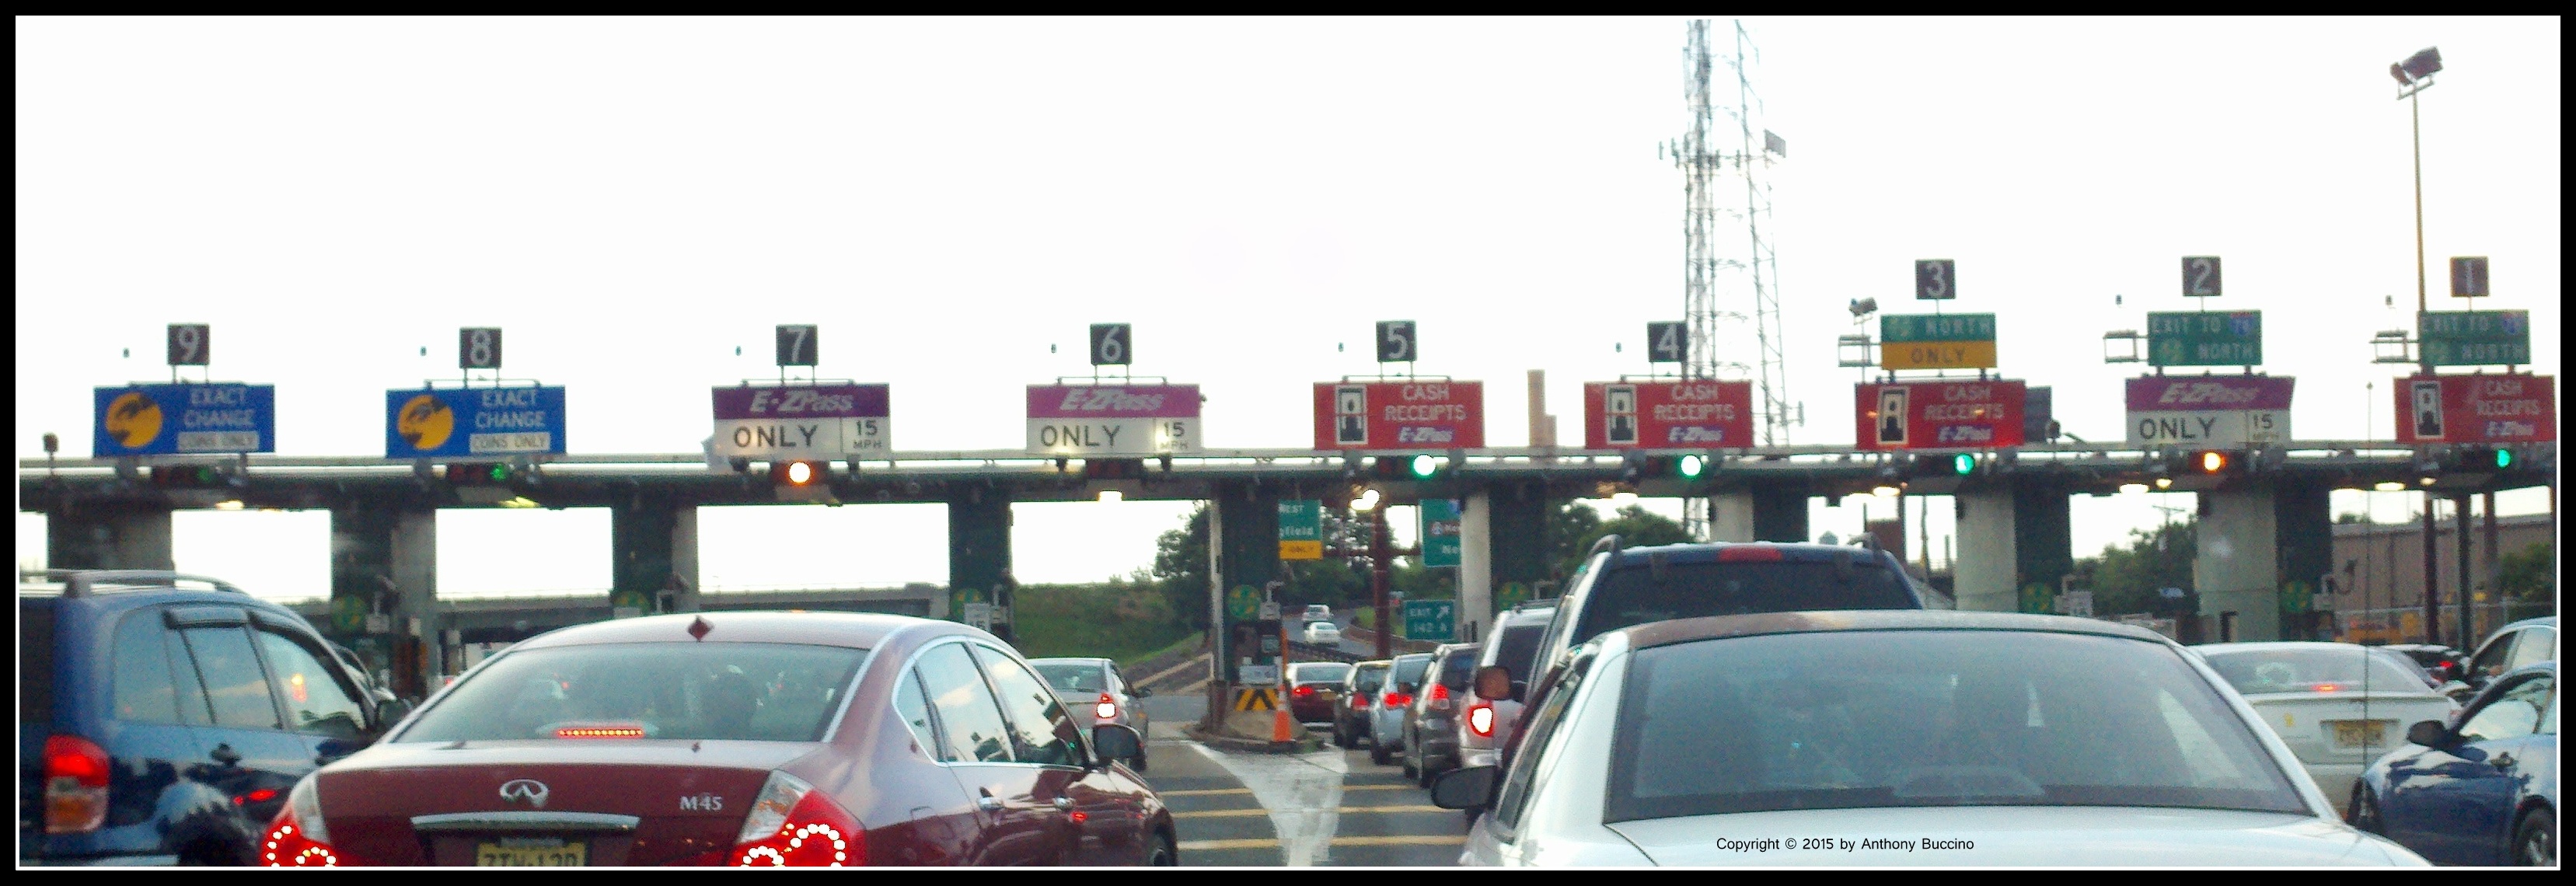 Garden State Parkway toll booth traffic jam, e-zpass,  A Buccino